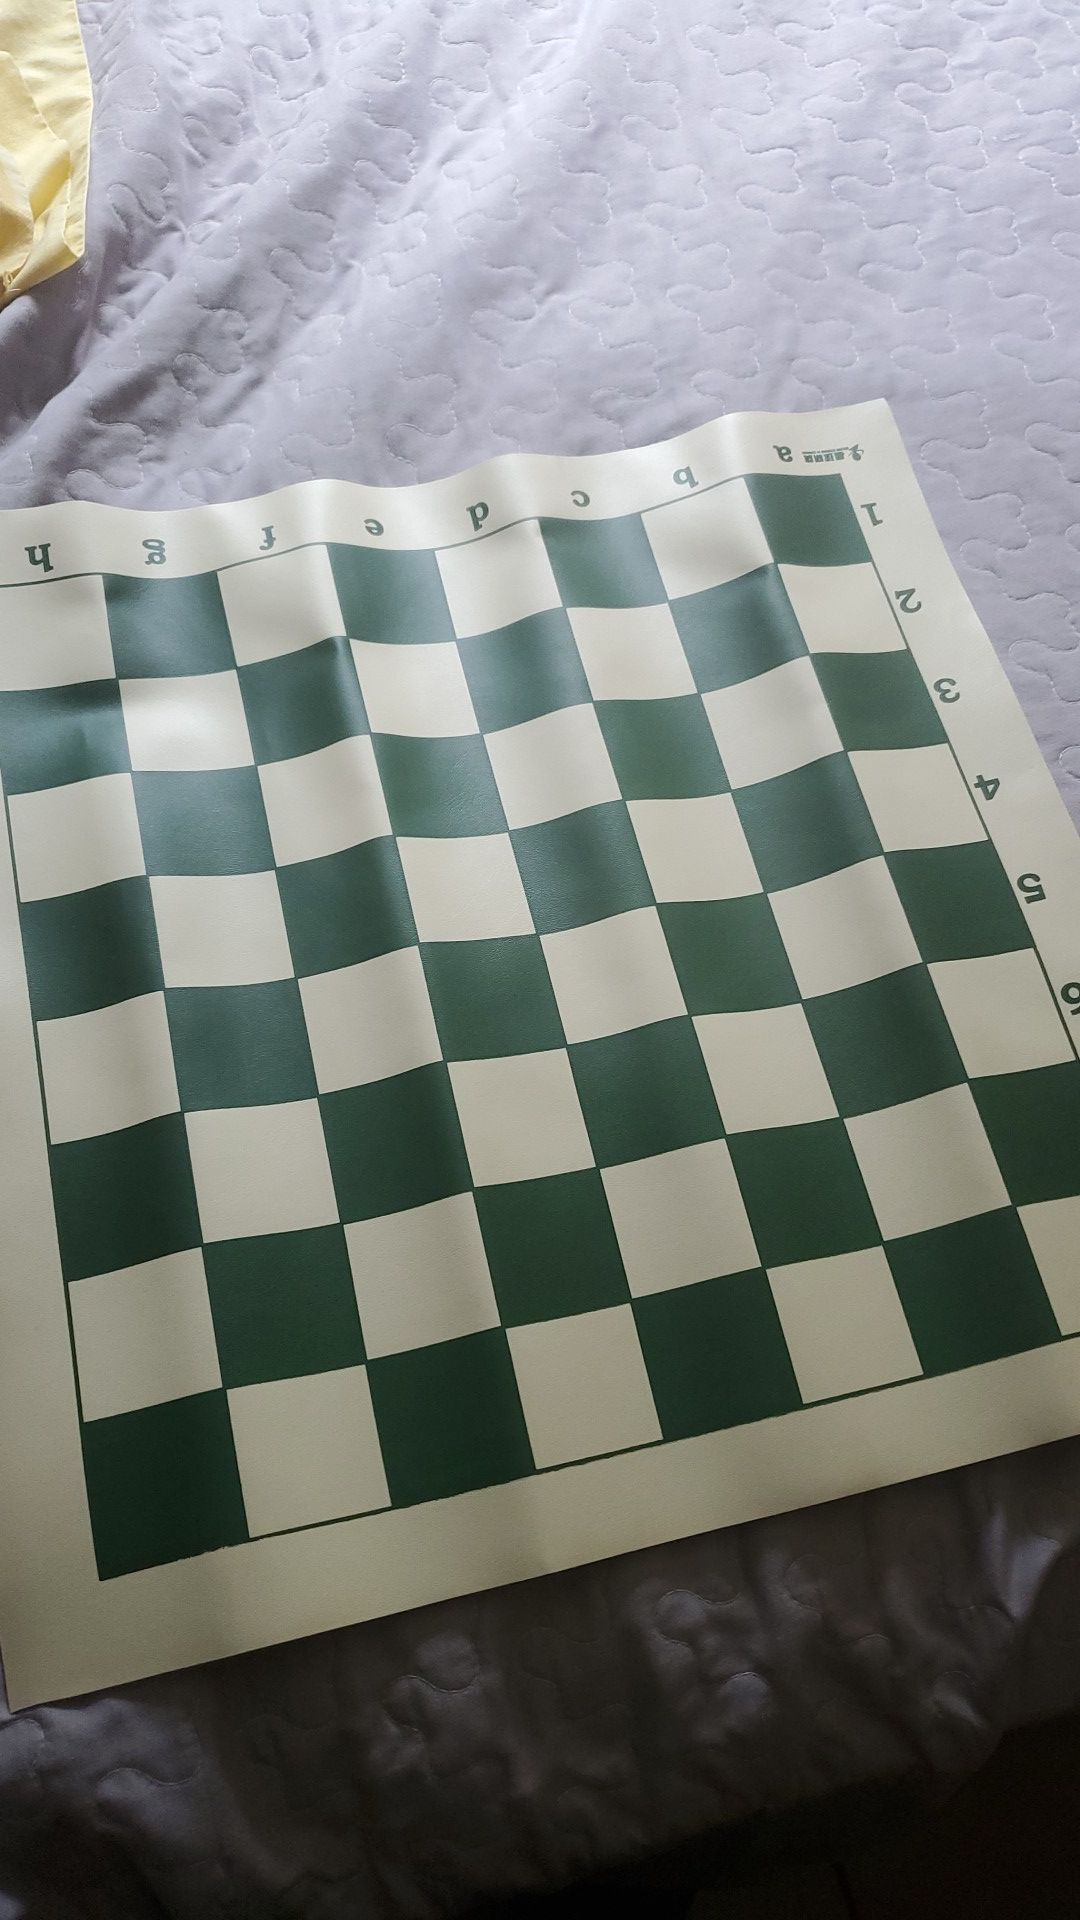 Chess Plastic Mat: to go mat